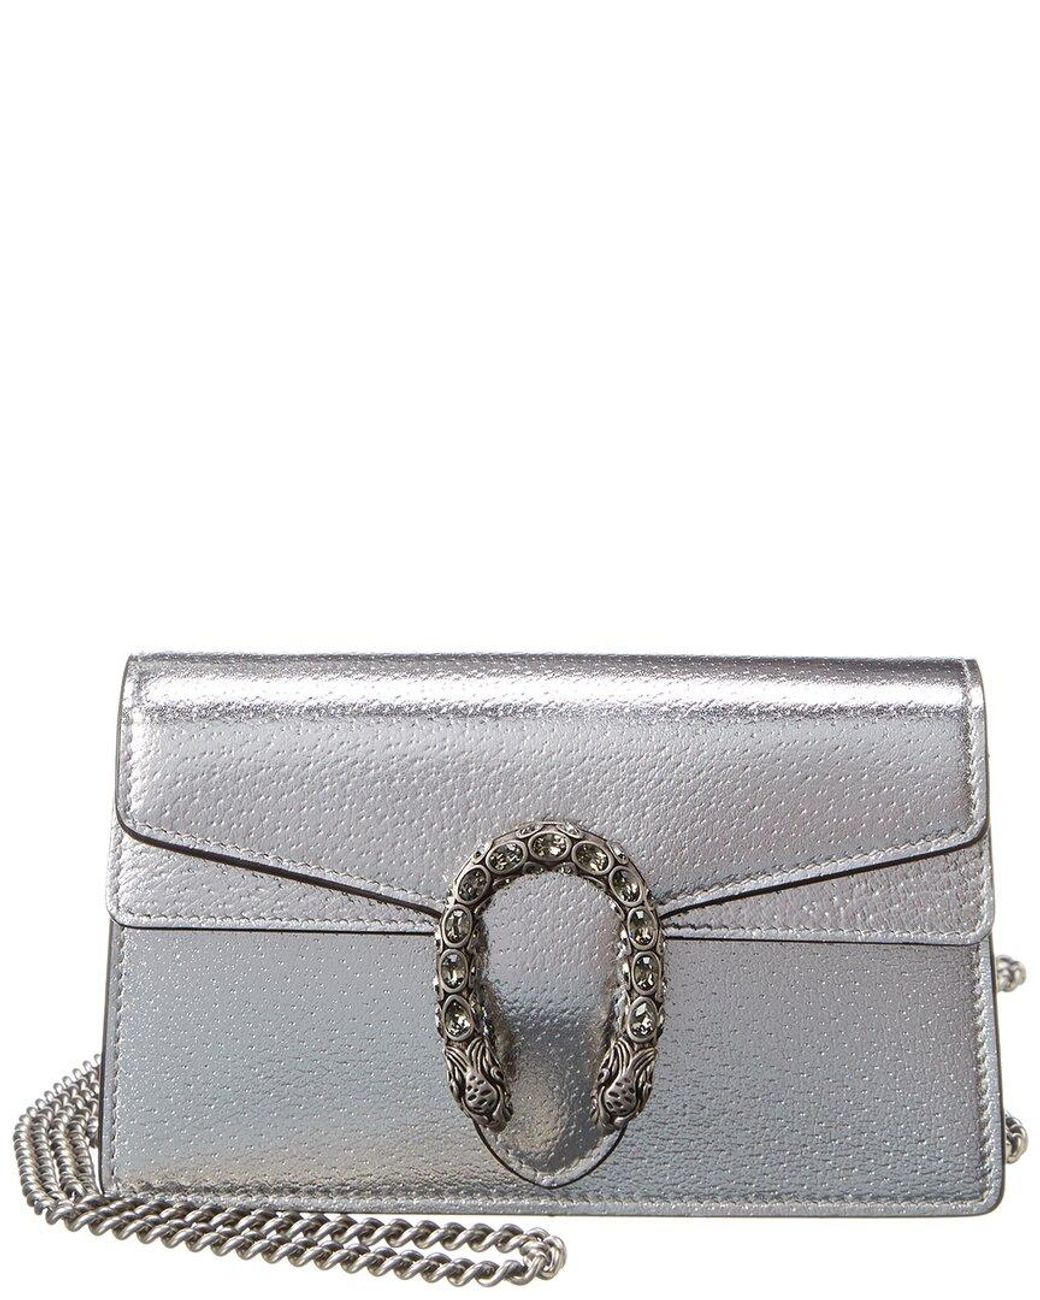 Gucci Dionysus Super Mini Metallic Leather Shoulder Bag in Gray